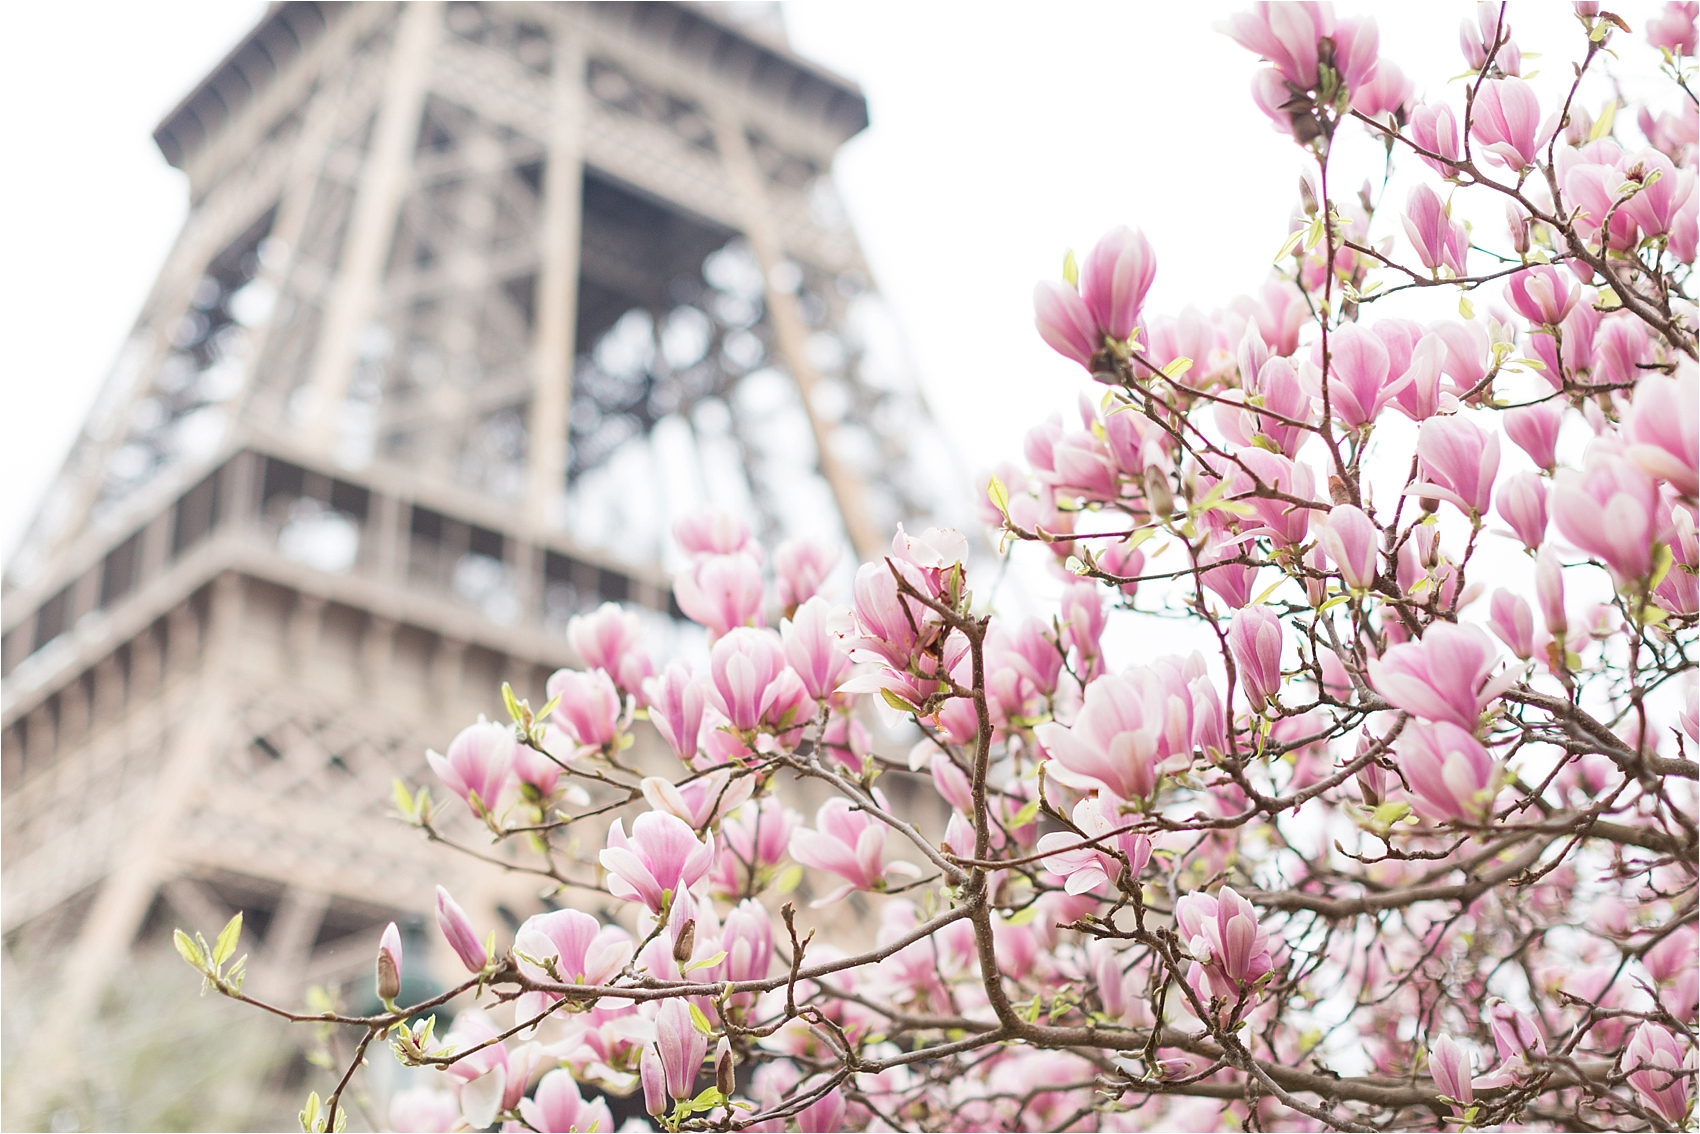 Eiffel with Cherry Blossom Magnolia Trees in Paris